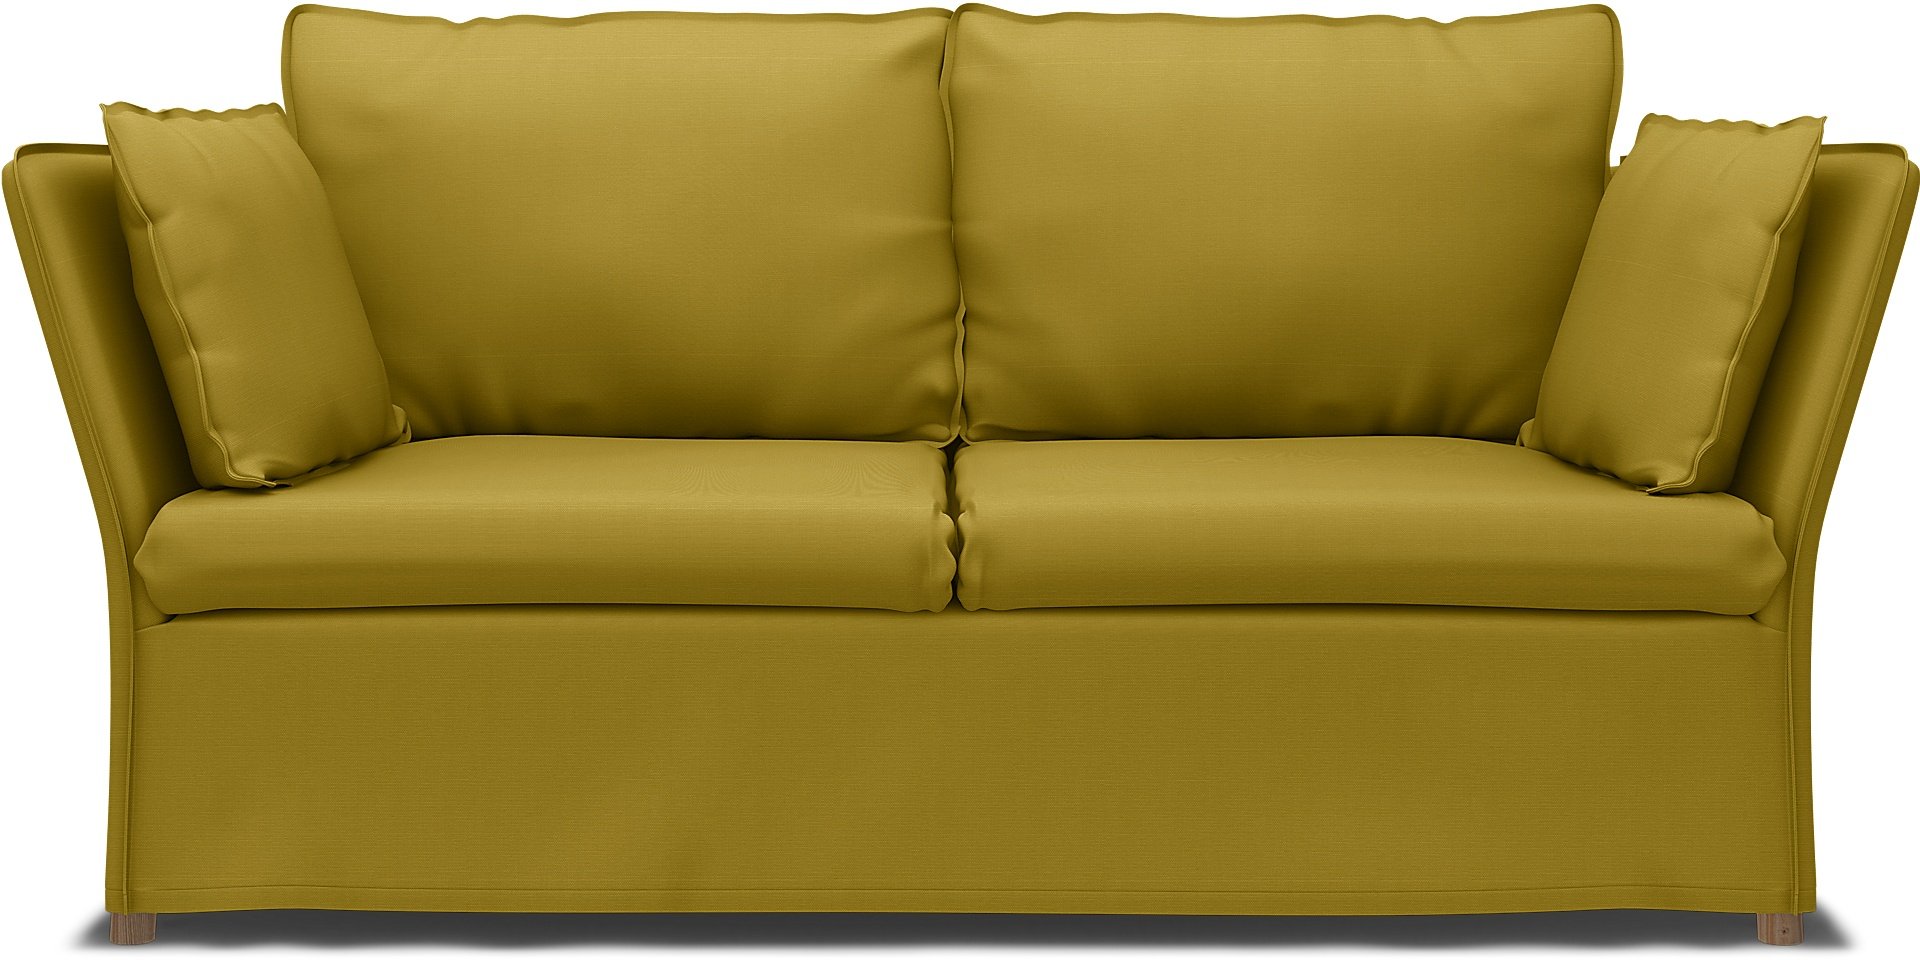 IKEA - Backsalen 2 seater sofa, Olive Oil, Cotton - Bemz